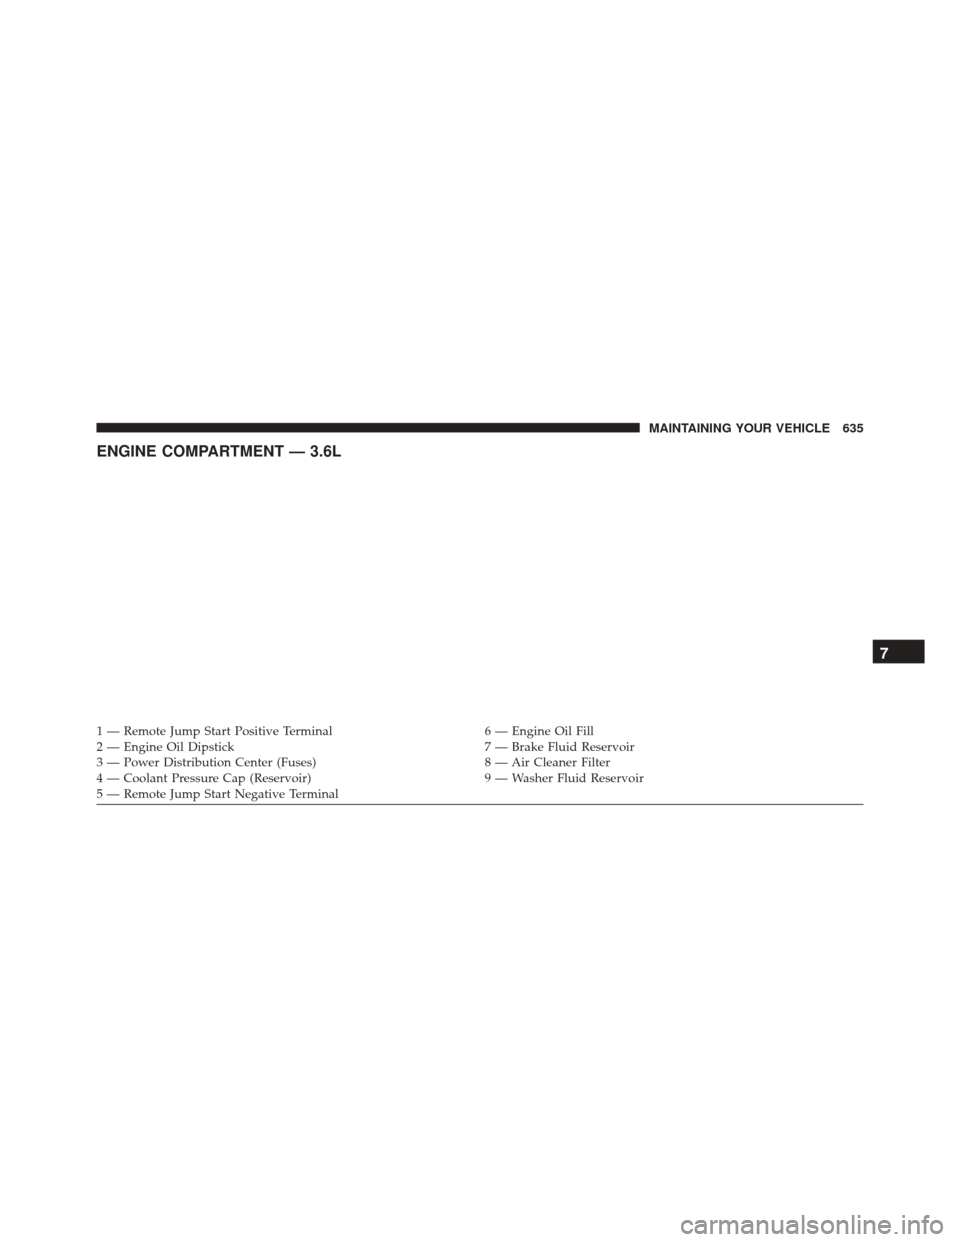 DODGE DURANGO 2016 3.G Owners Manual ENGINE COMPARTMENT — 3.6L
1 — Remote Jump Start Positive Terminal6 — Engine Oil Fill
2 — Engine Oil Dipstick 7 — Brake Fluid Reservoir
3 — Power Distribution Center (Fuses) 8 — Air Clean